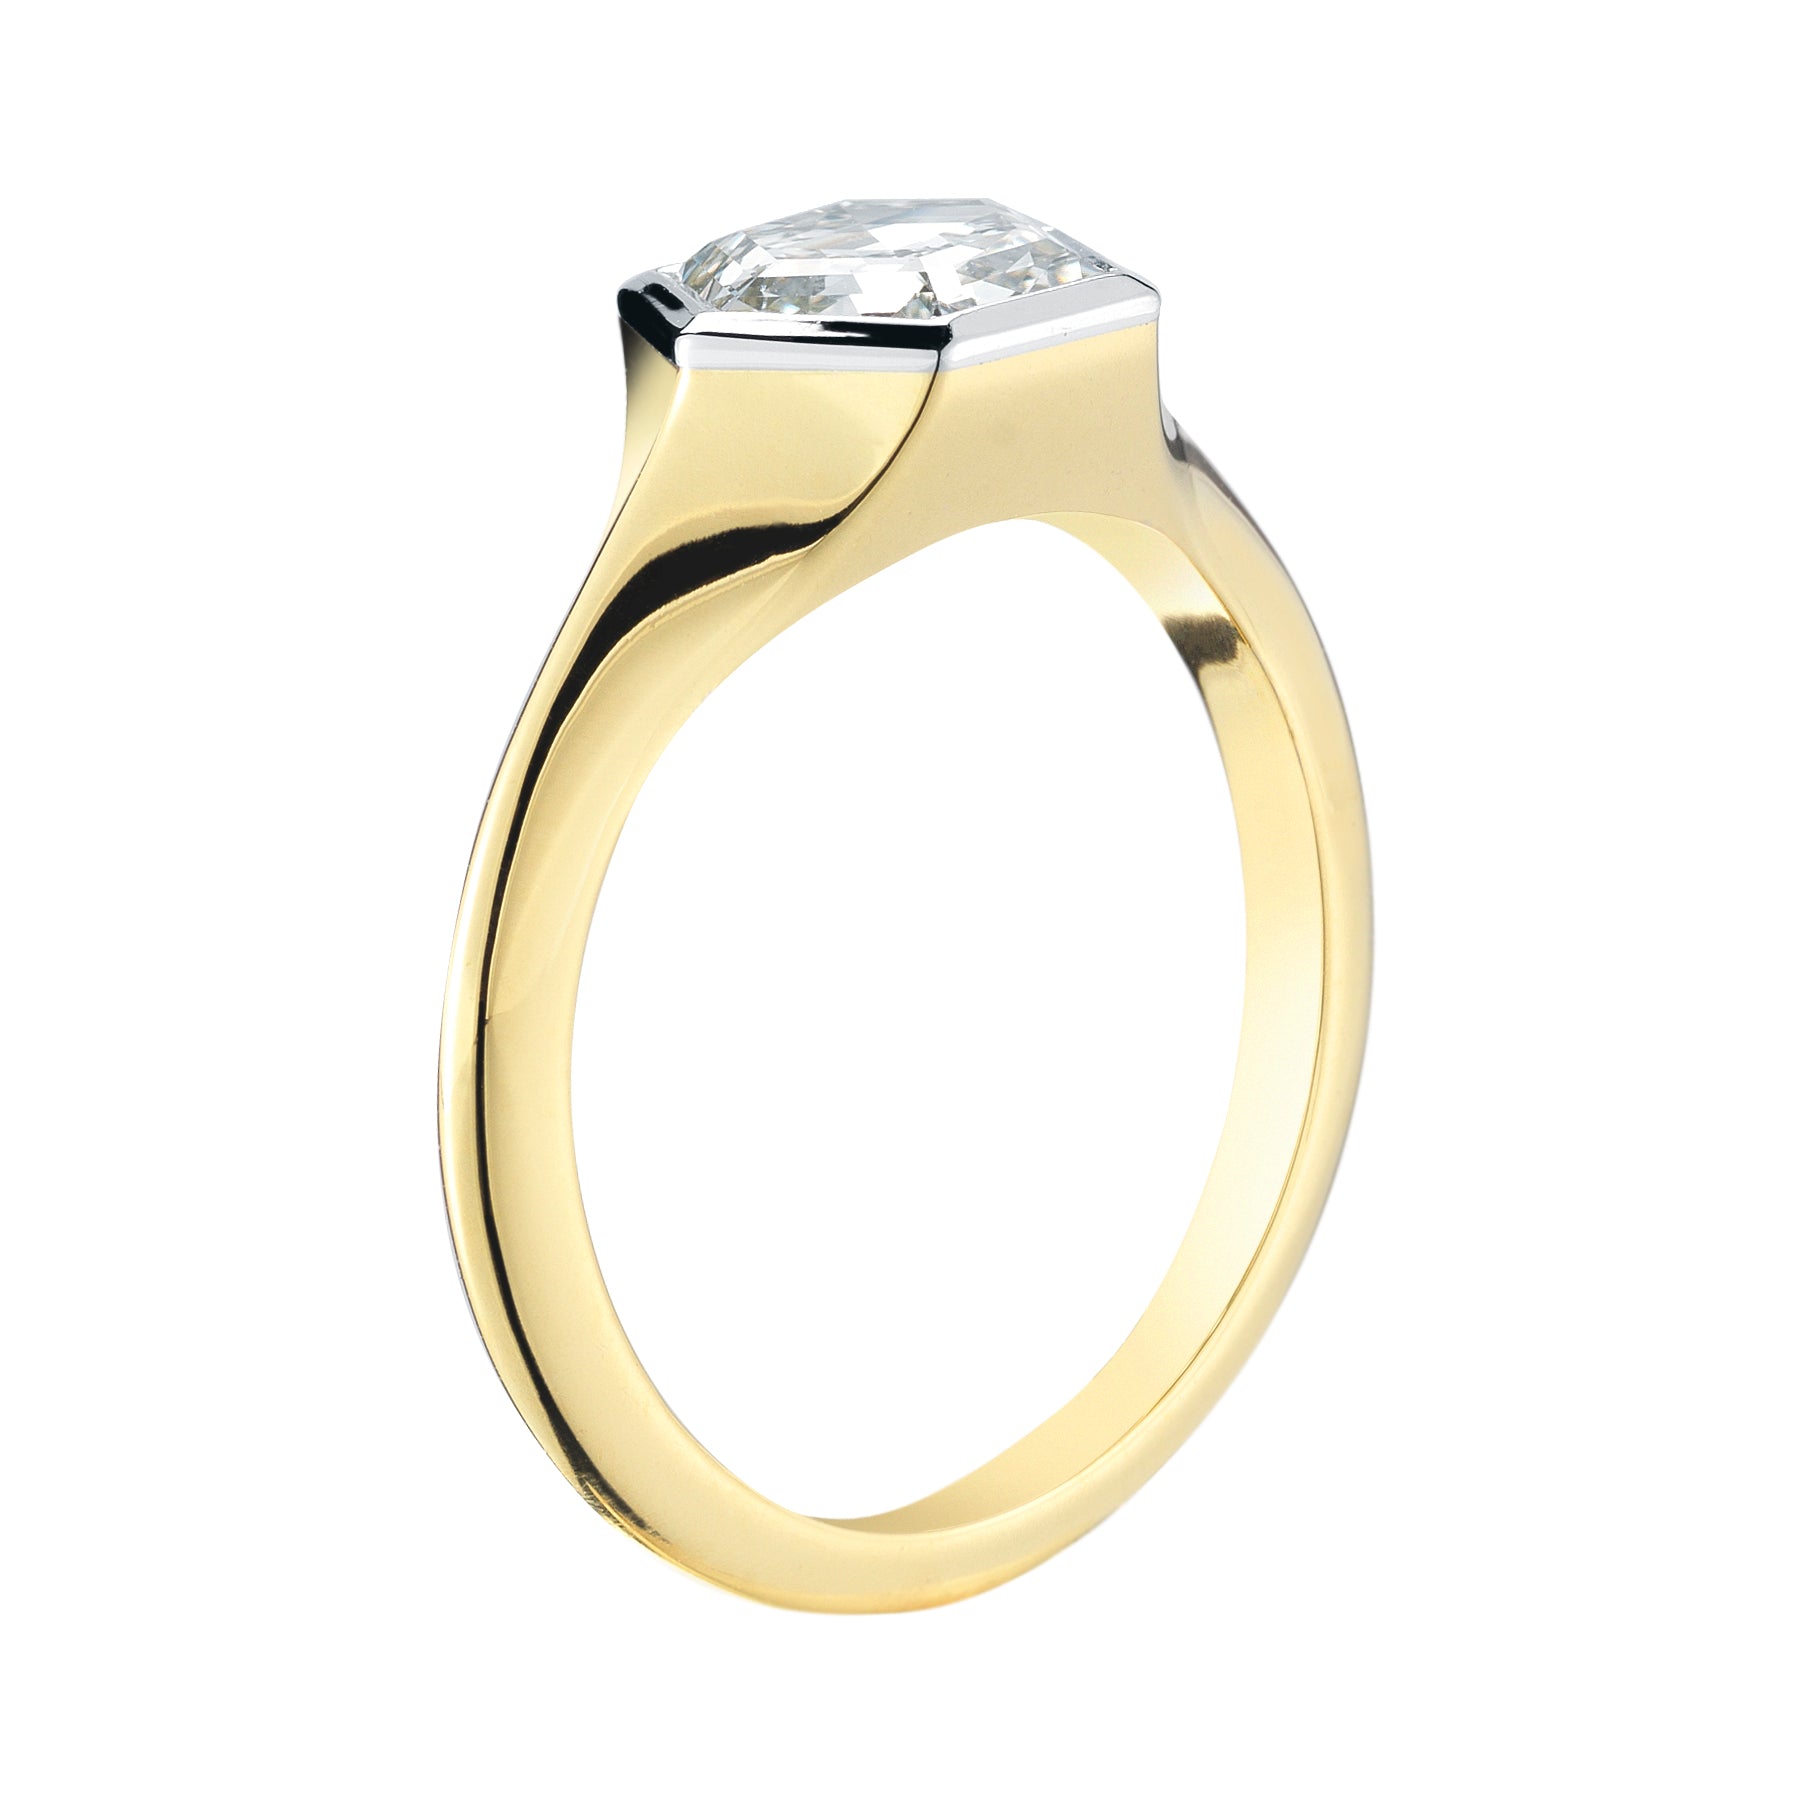 Hexagon Diamond Engagement Ring